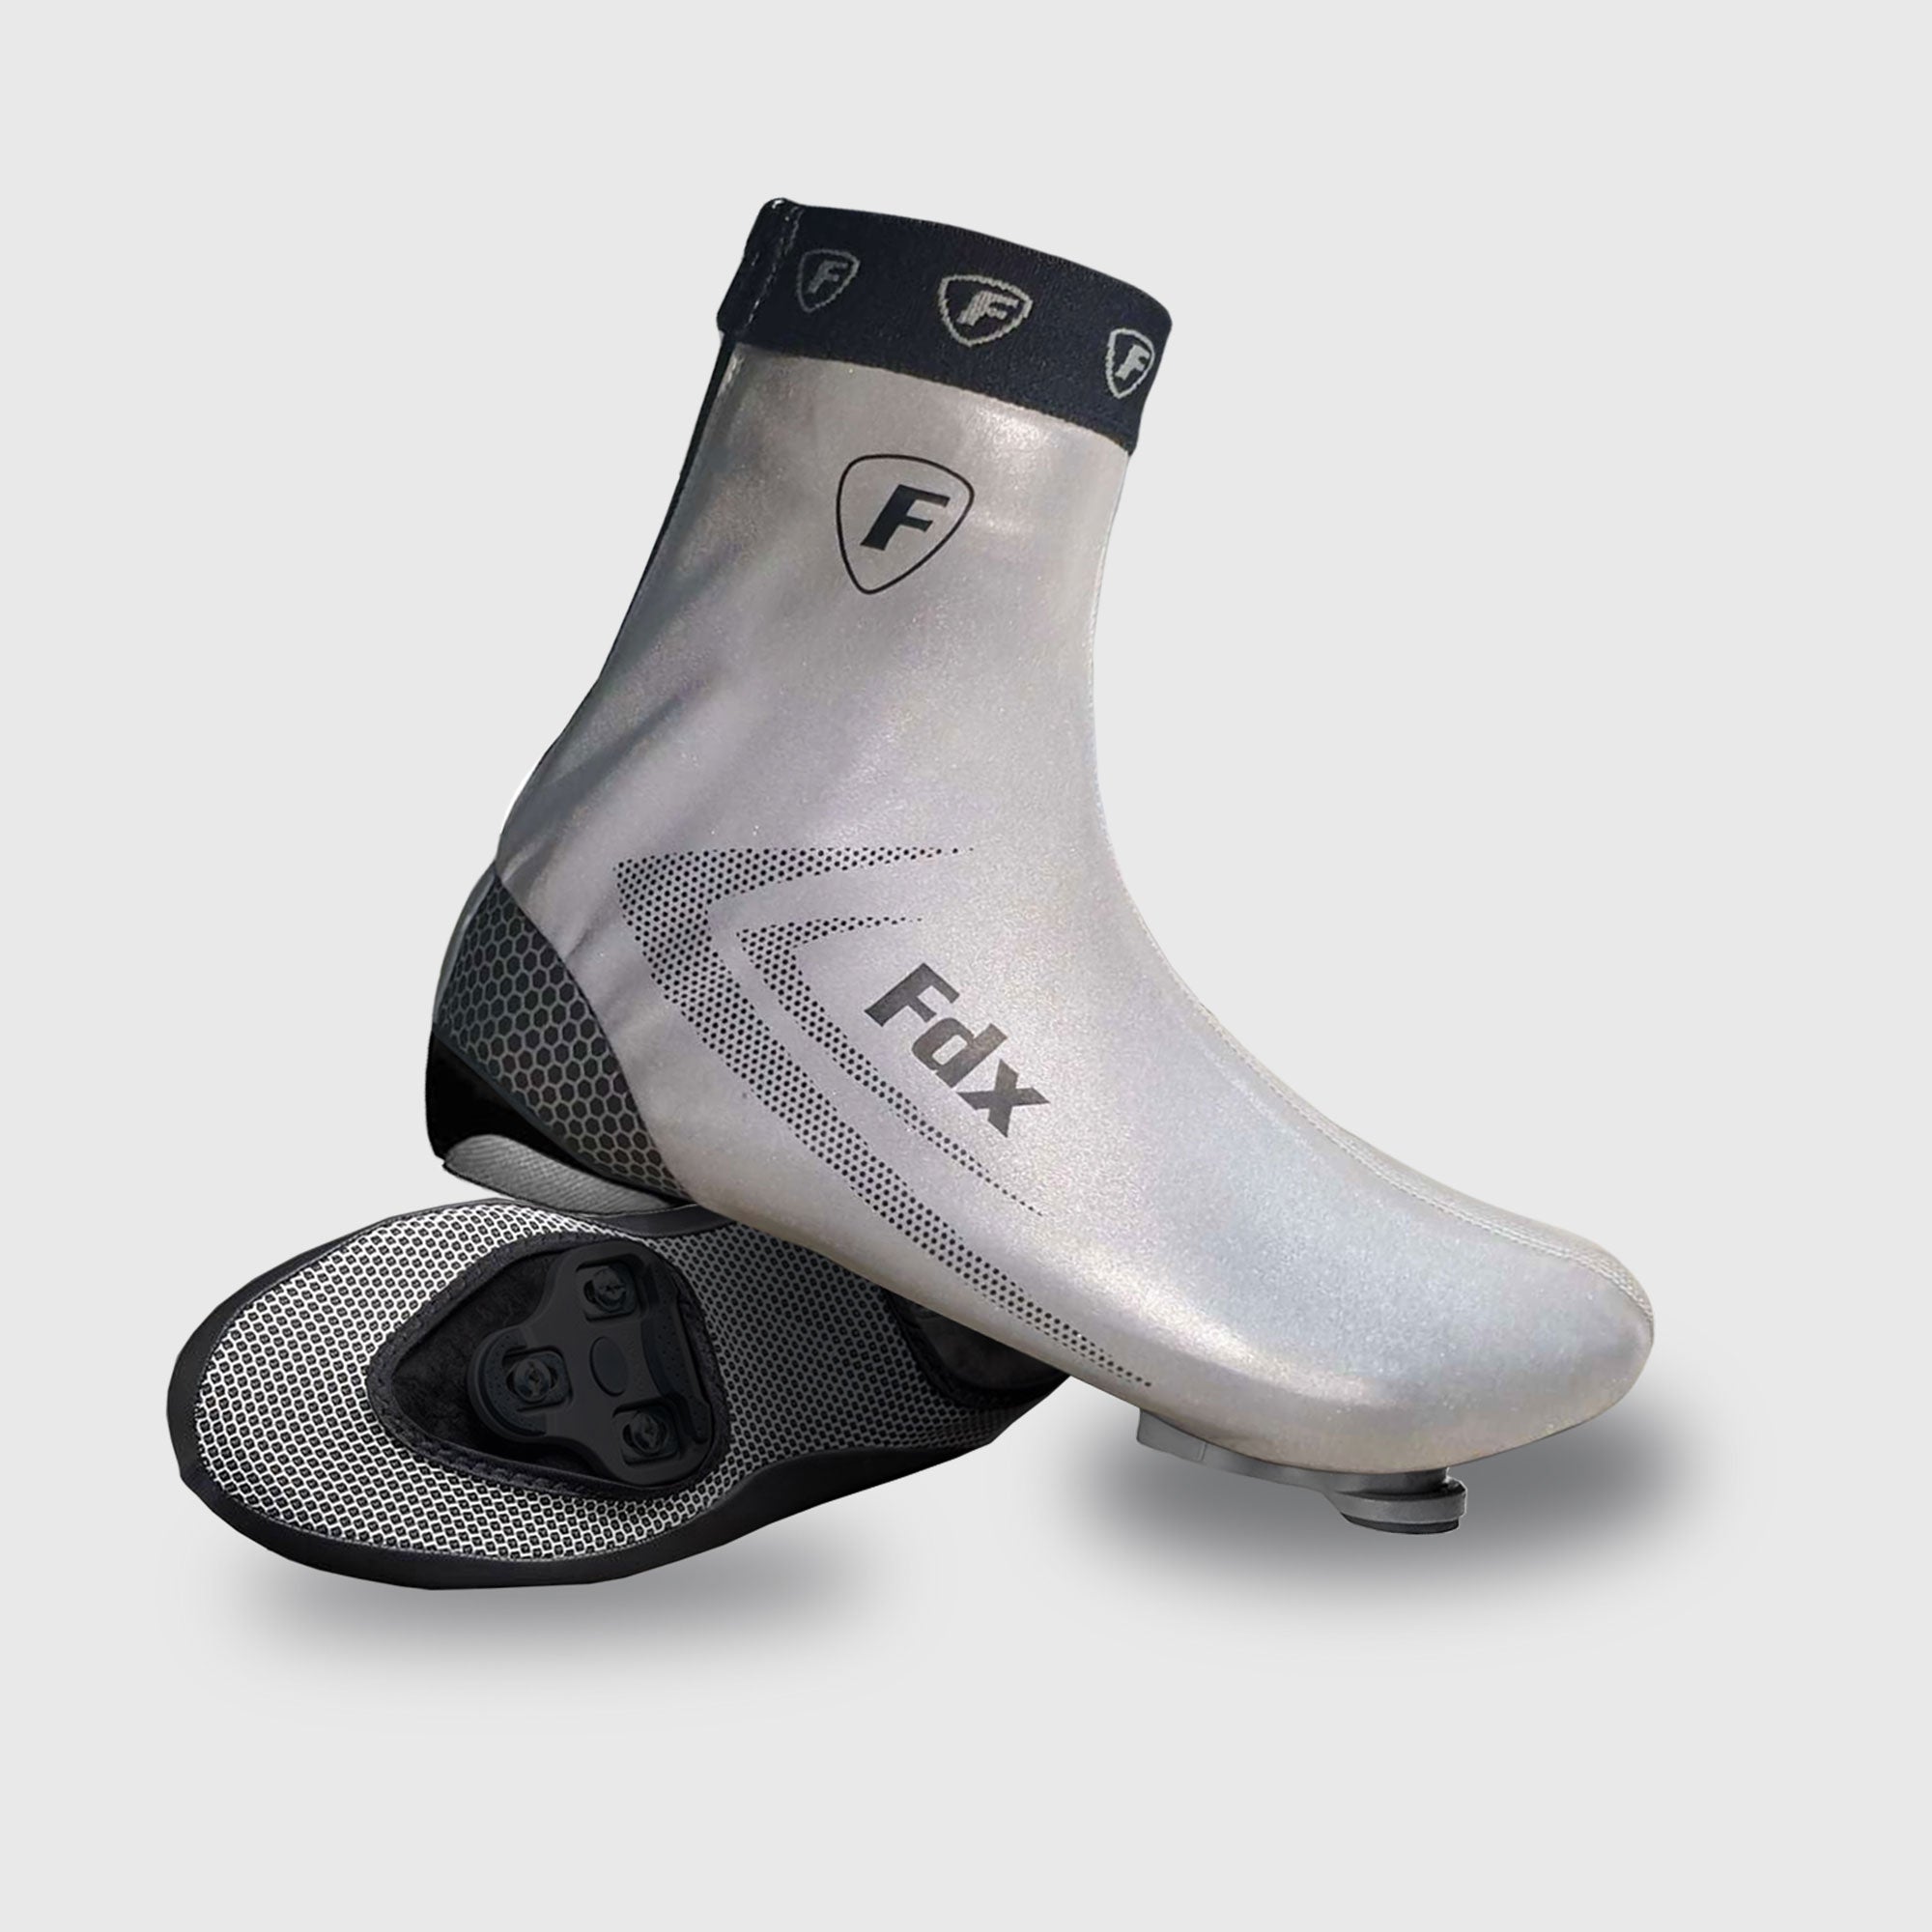 Fdx Unisex Grey Cycling Over Shoe Breathable Lightweight Rainproof Hi Viz Reflective Details Men Women Cycling Gear AU